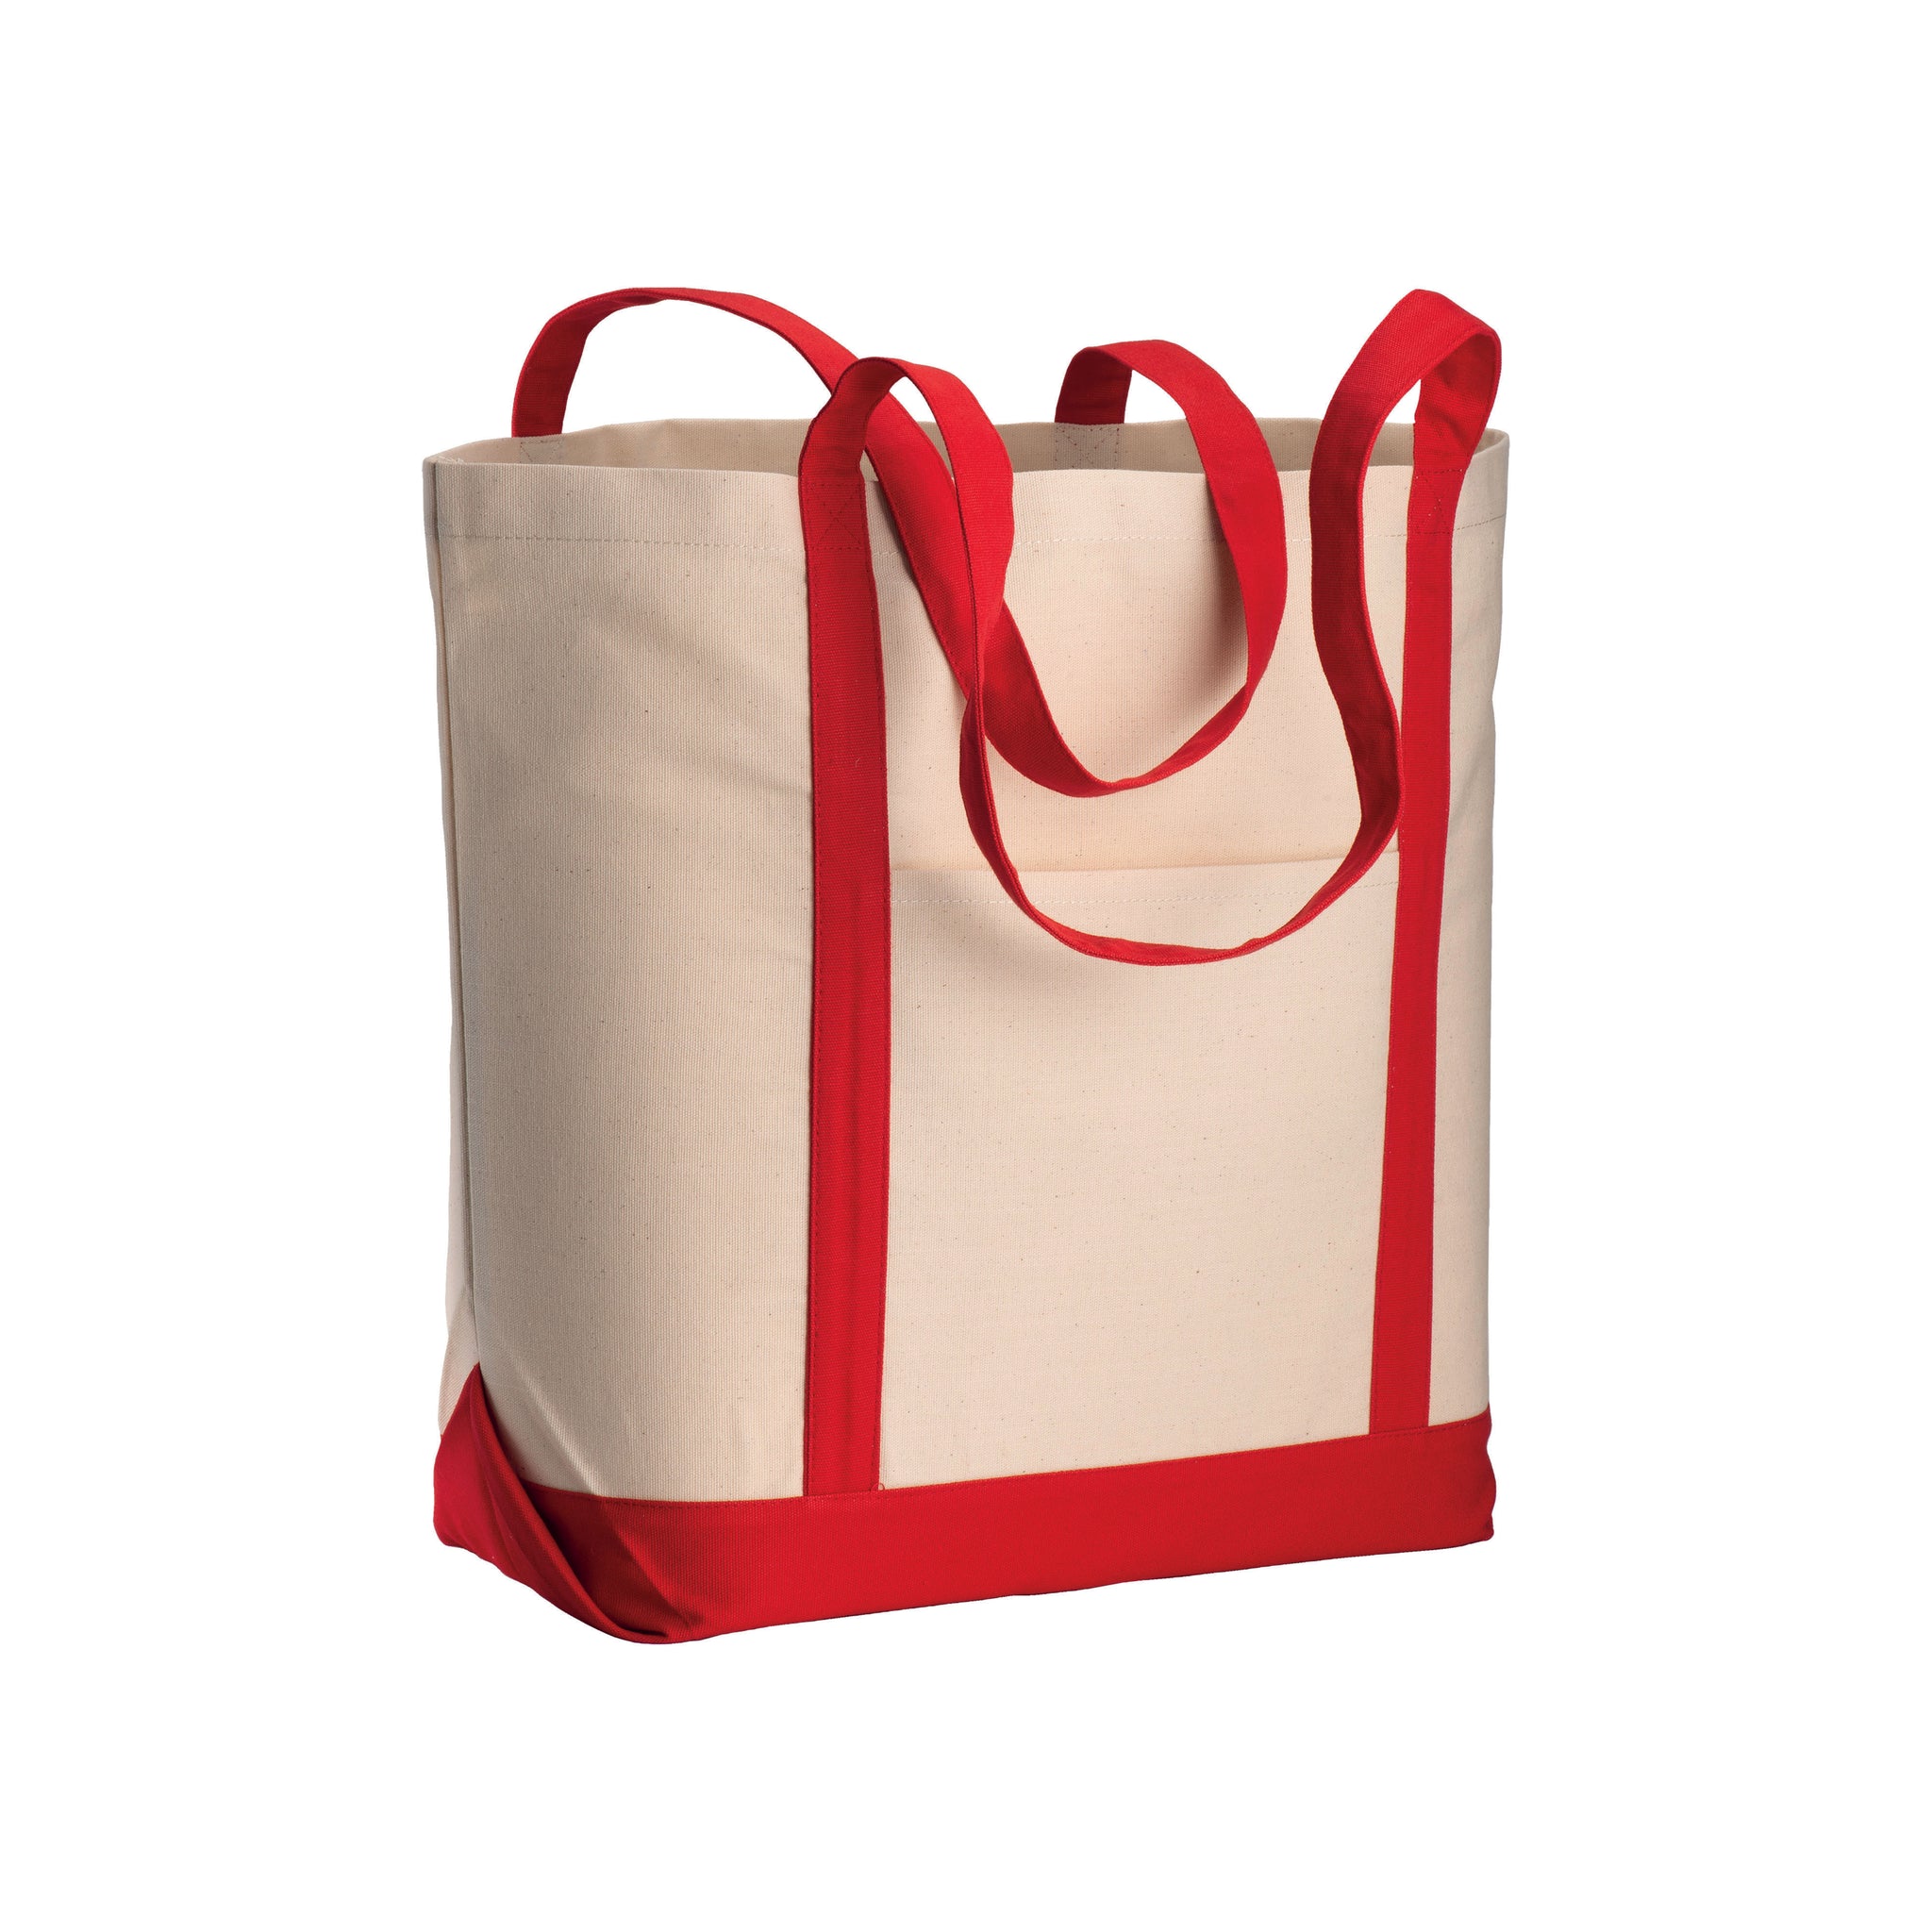 borsa promozionale in cotone rossa 01341938 VAR01